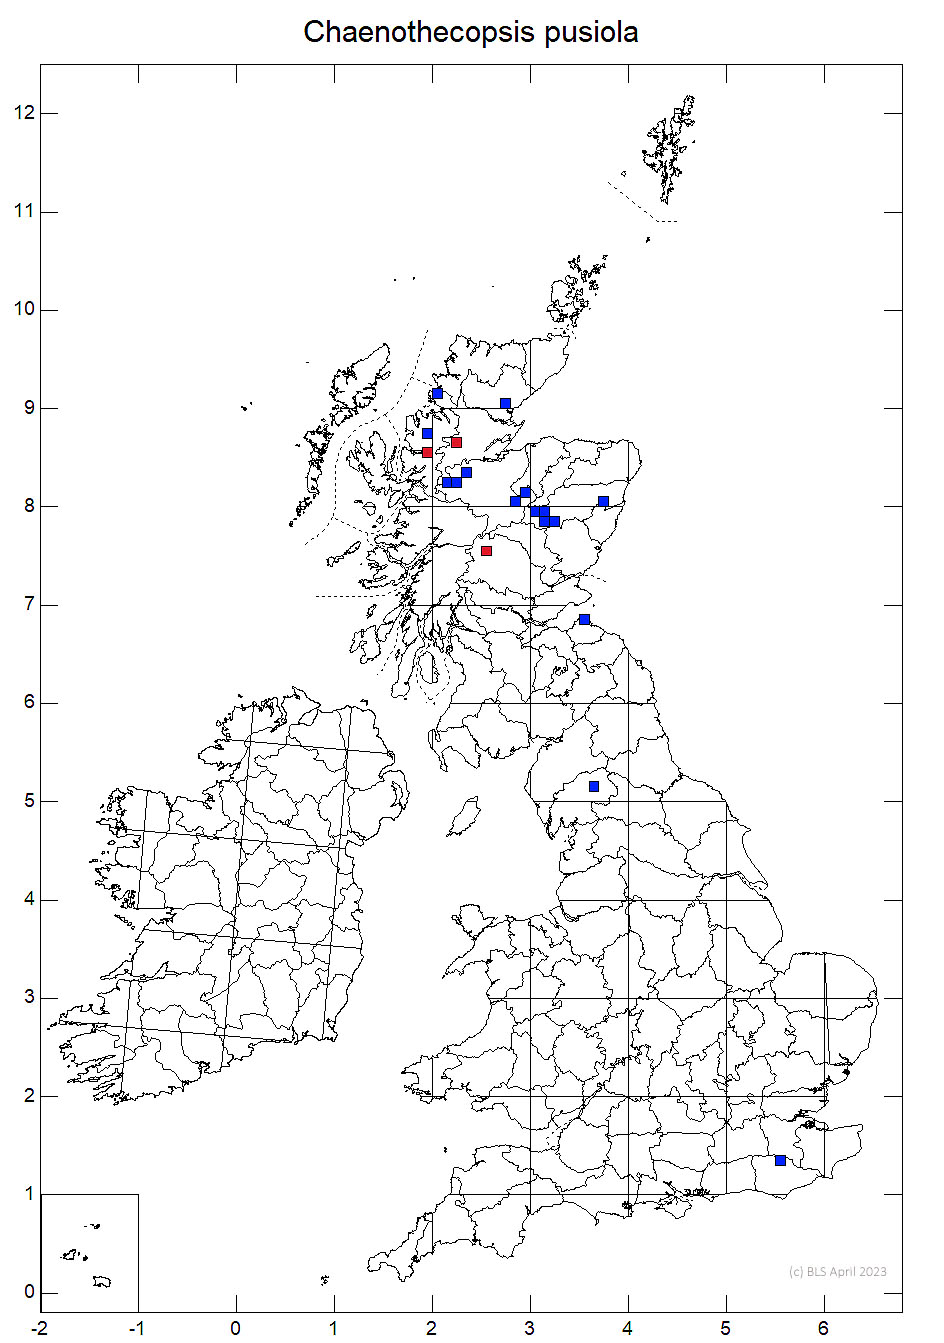 Chaenothecopsis pusiola 10km sq distribution map